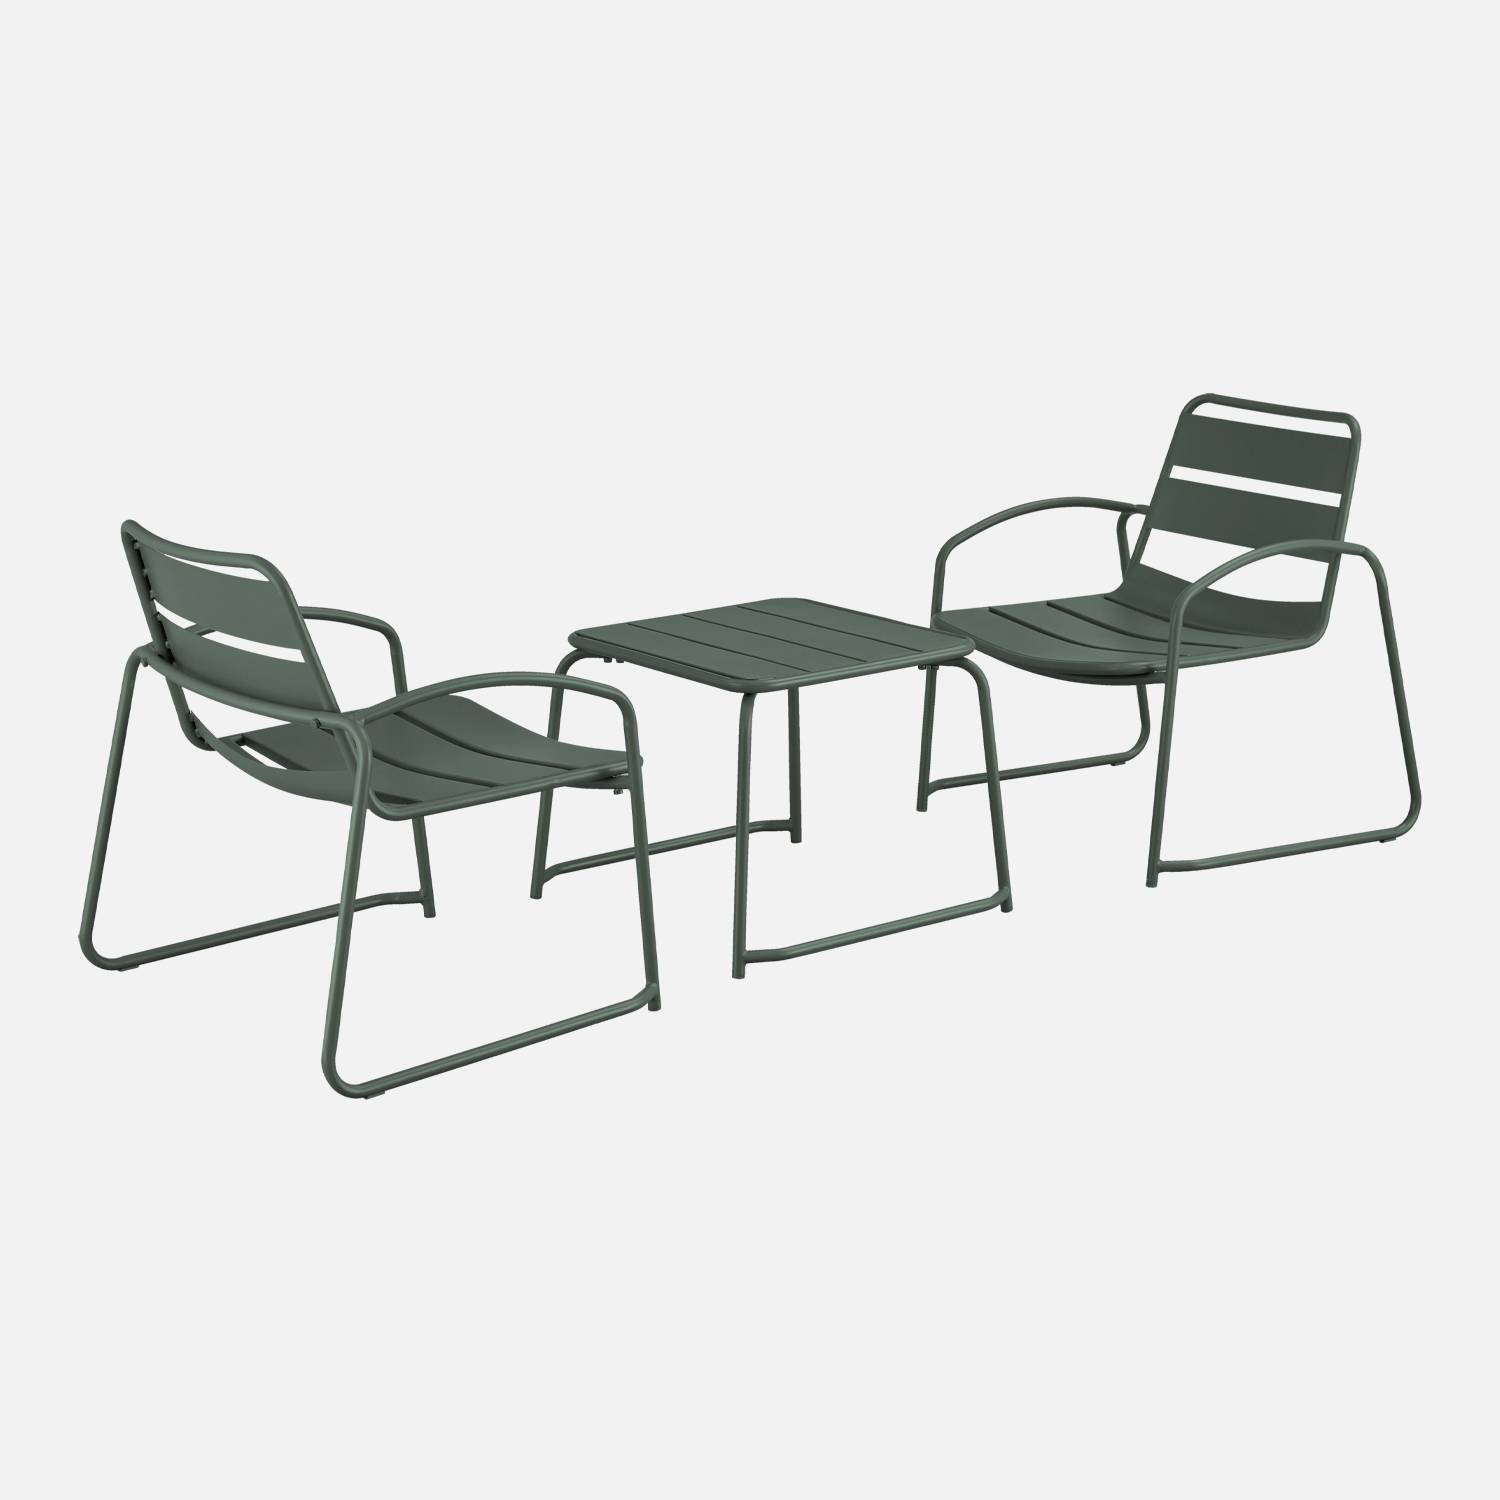 Gartenset -Salbeigrün - Stahl - 2 Sessel - 1 Tisch I sweeek